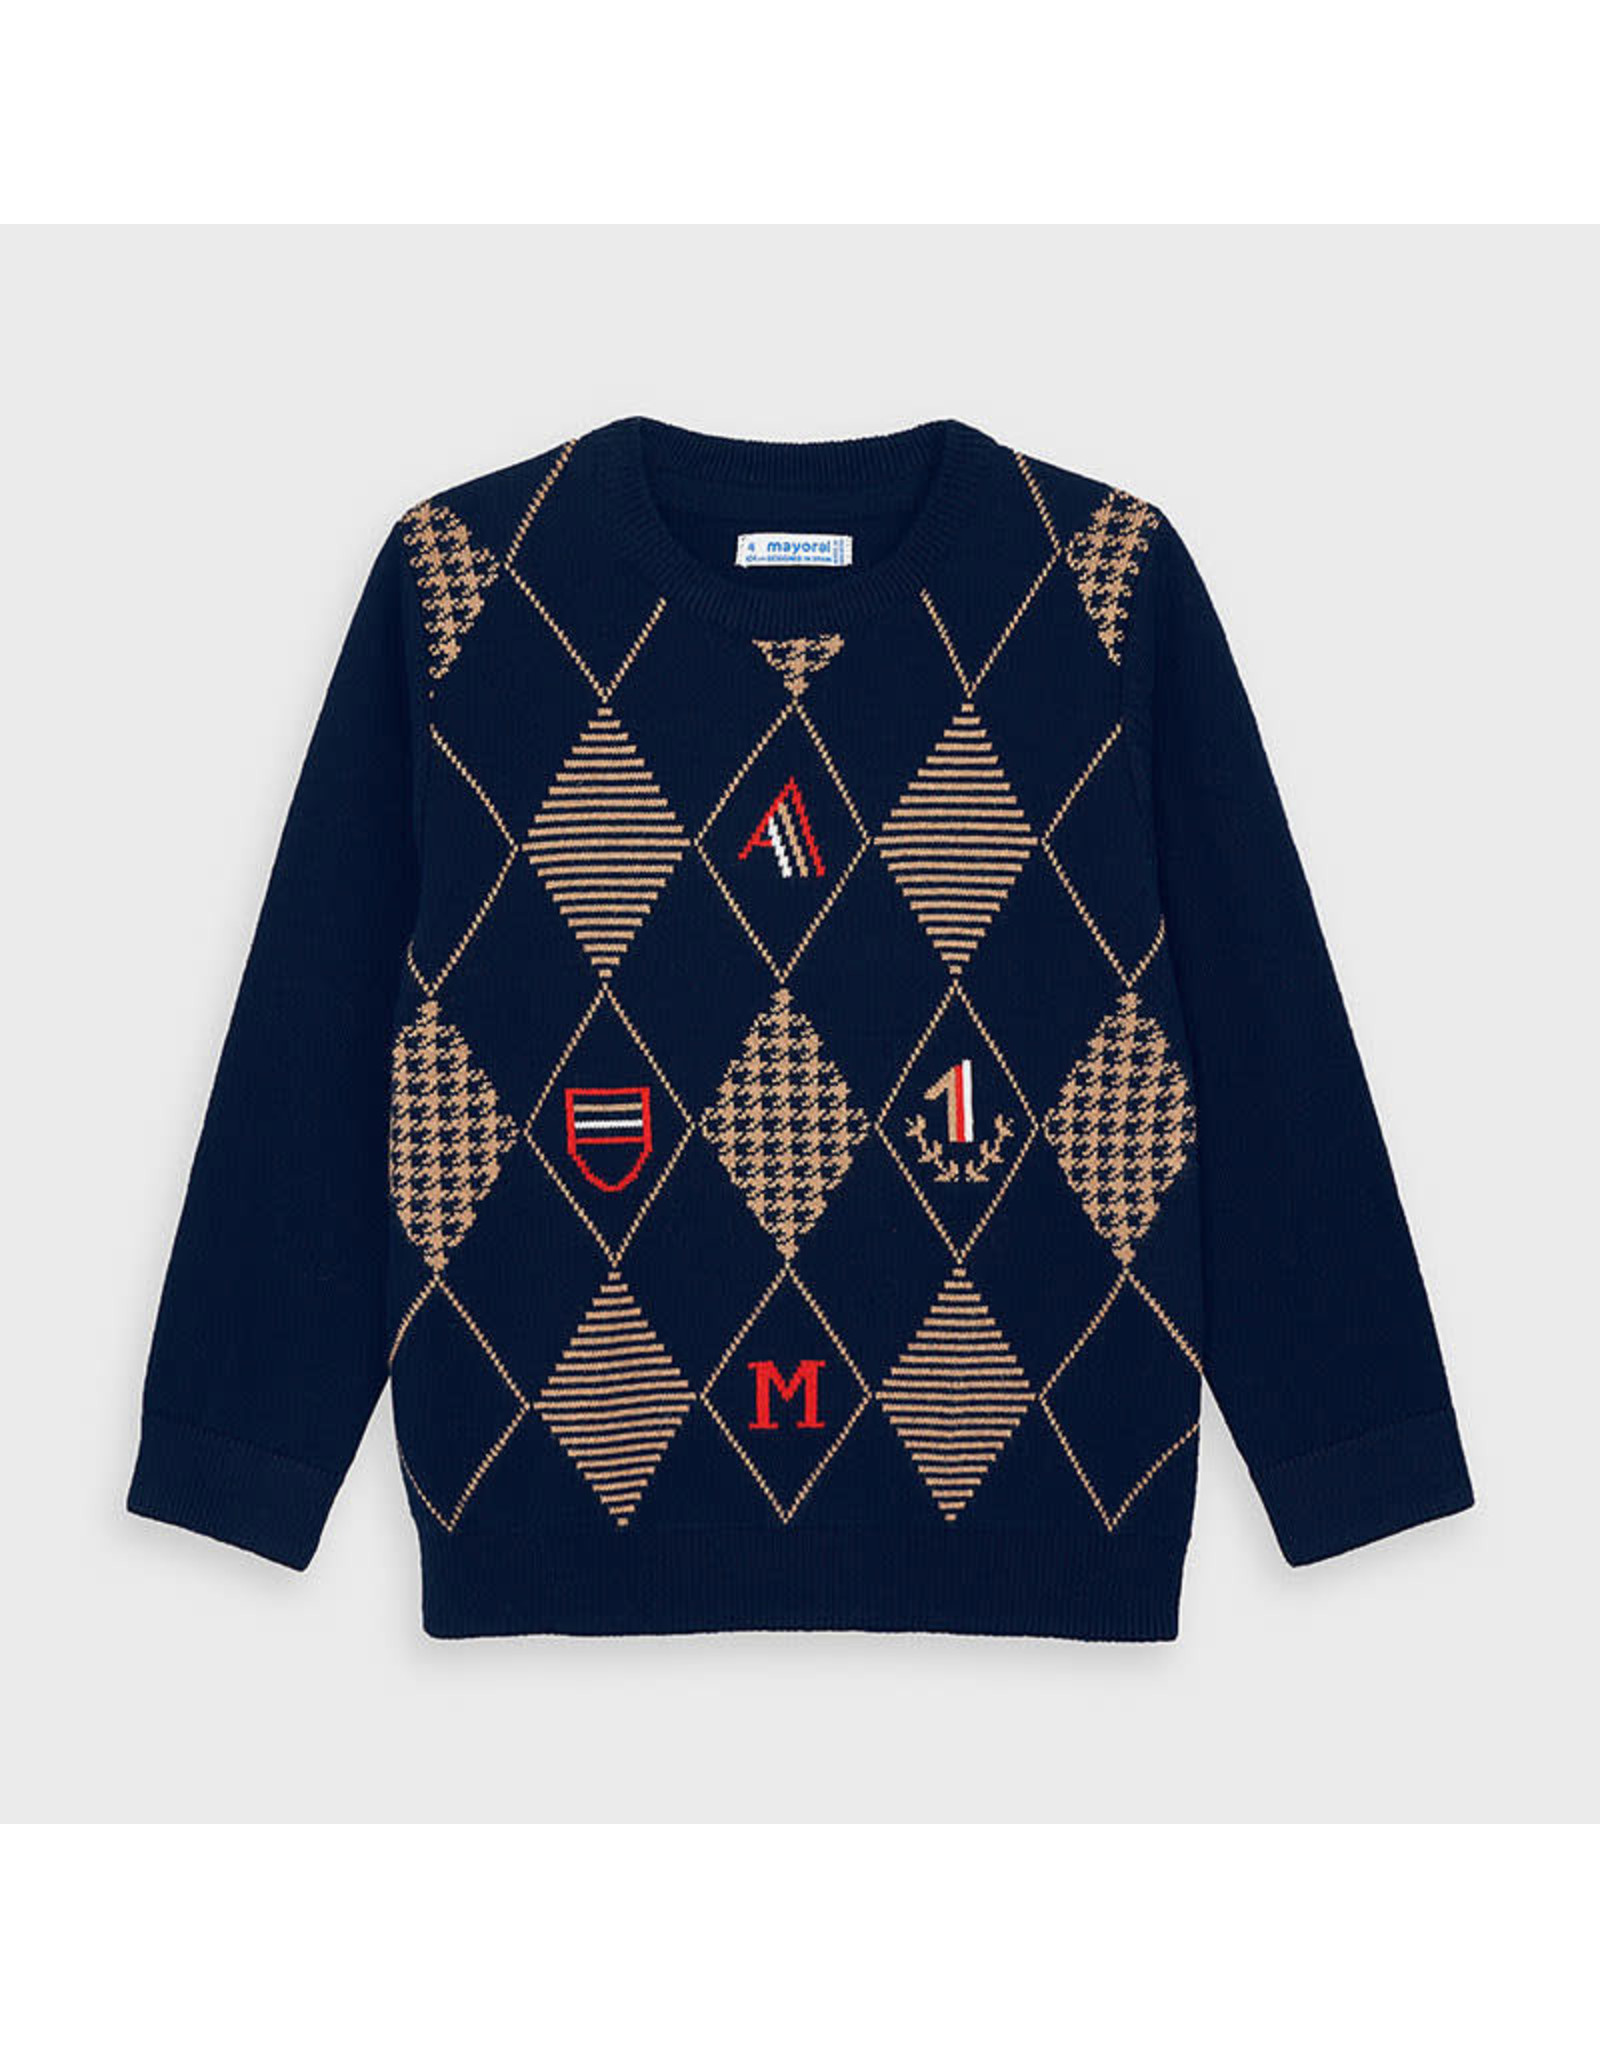 Mayoral Navy Diamond Sweater (size 8)